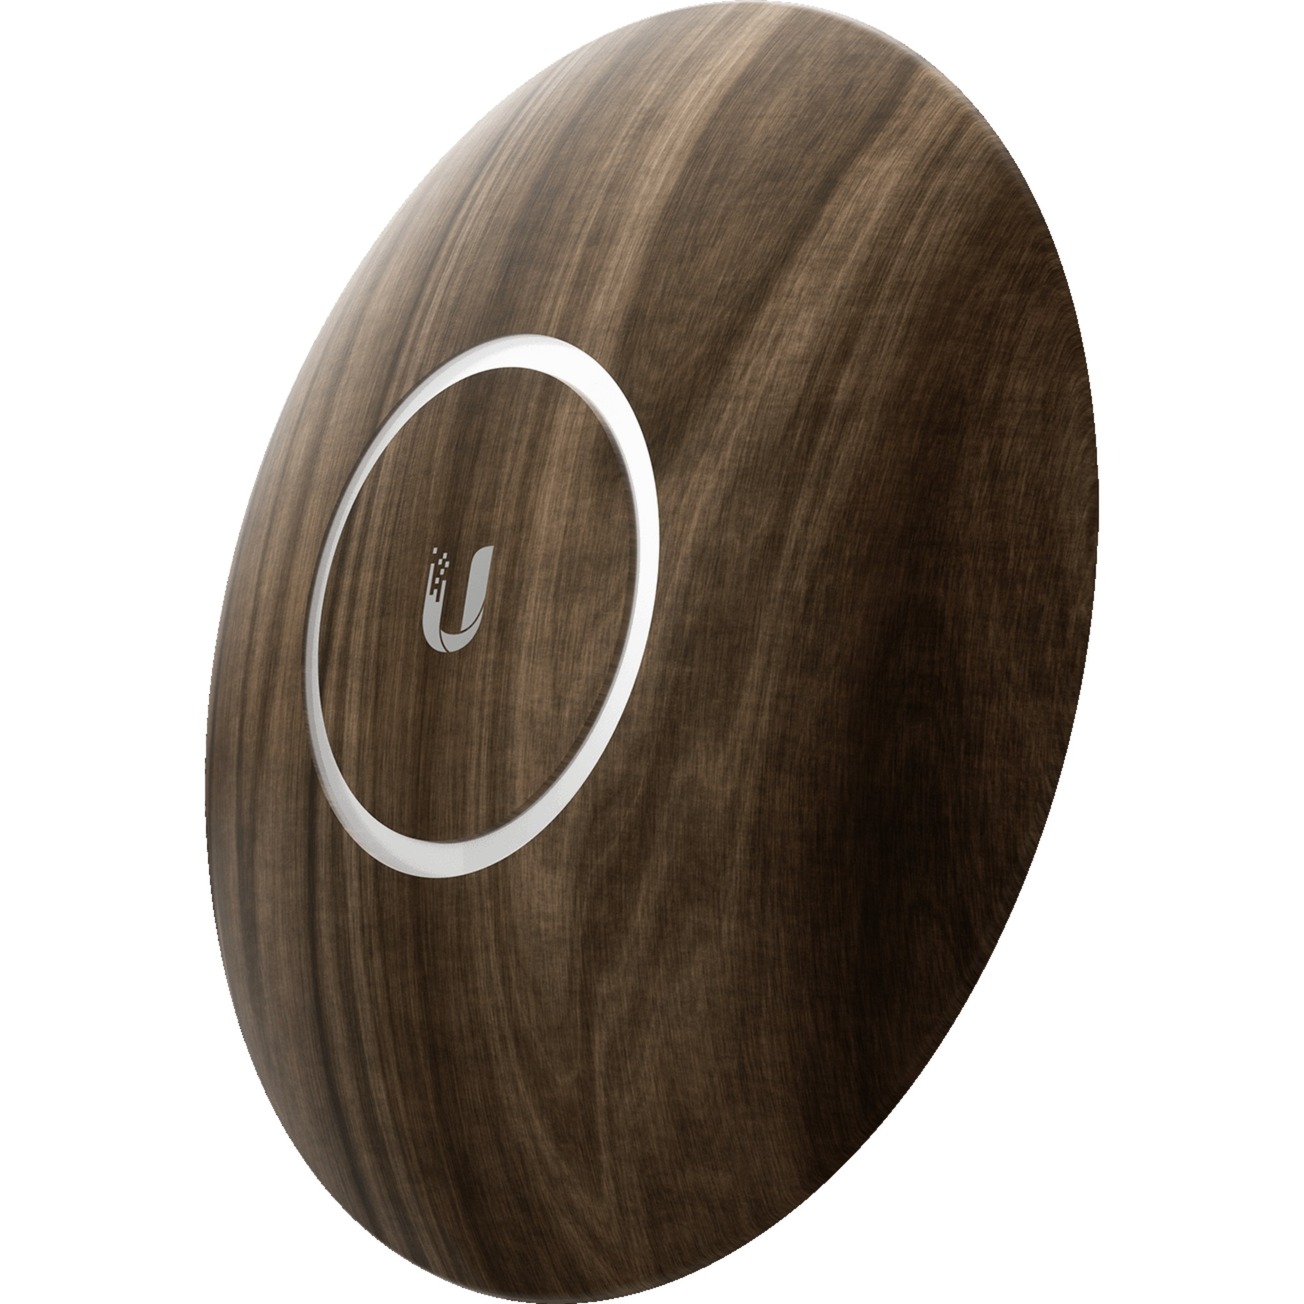 UniFi nanoHD Abdeckung Wood, 3er Pack von Ubiquiti